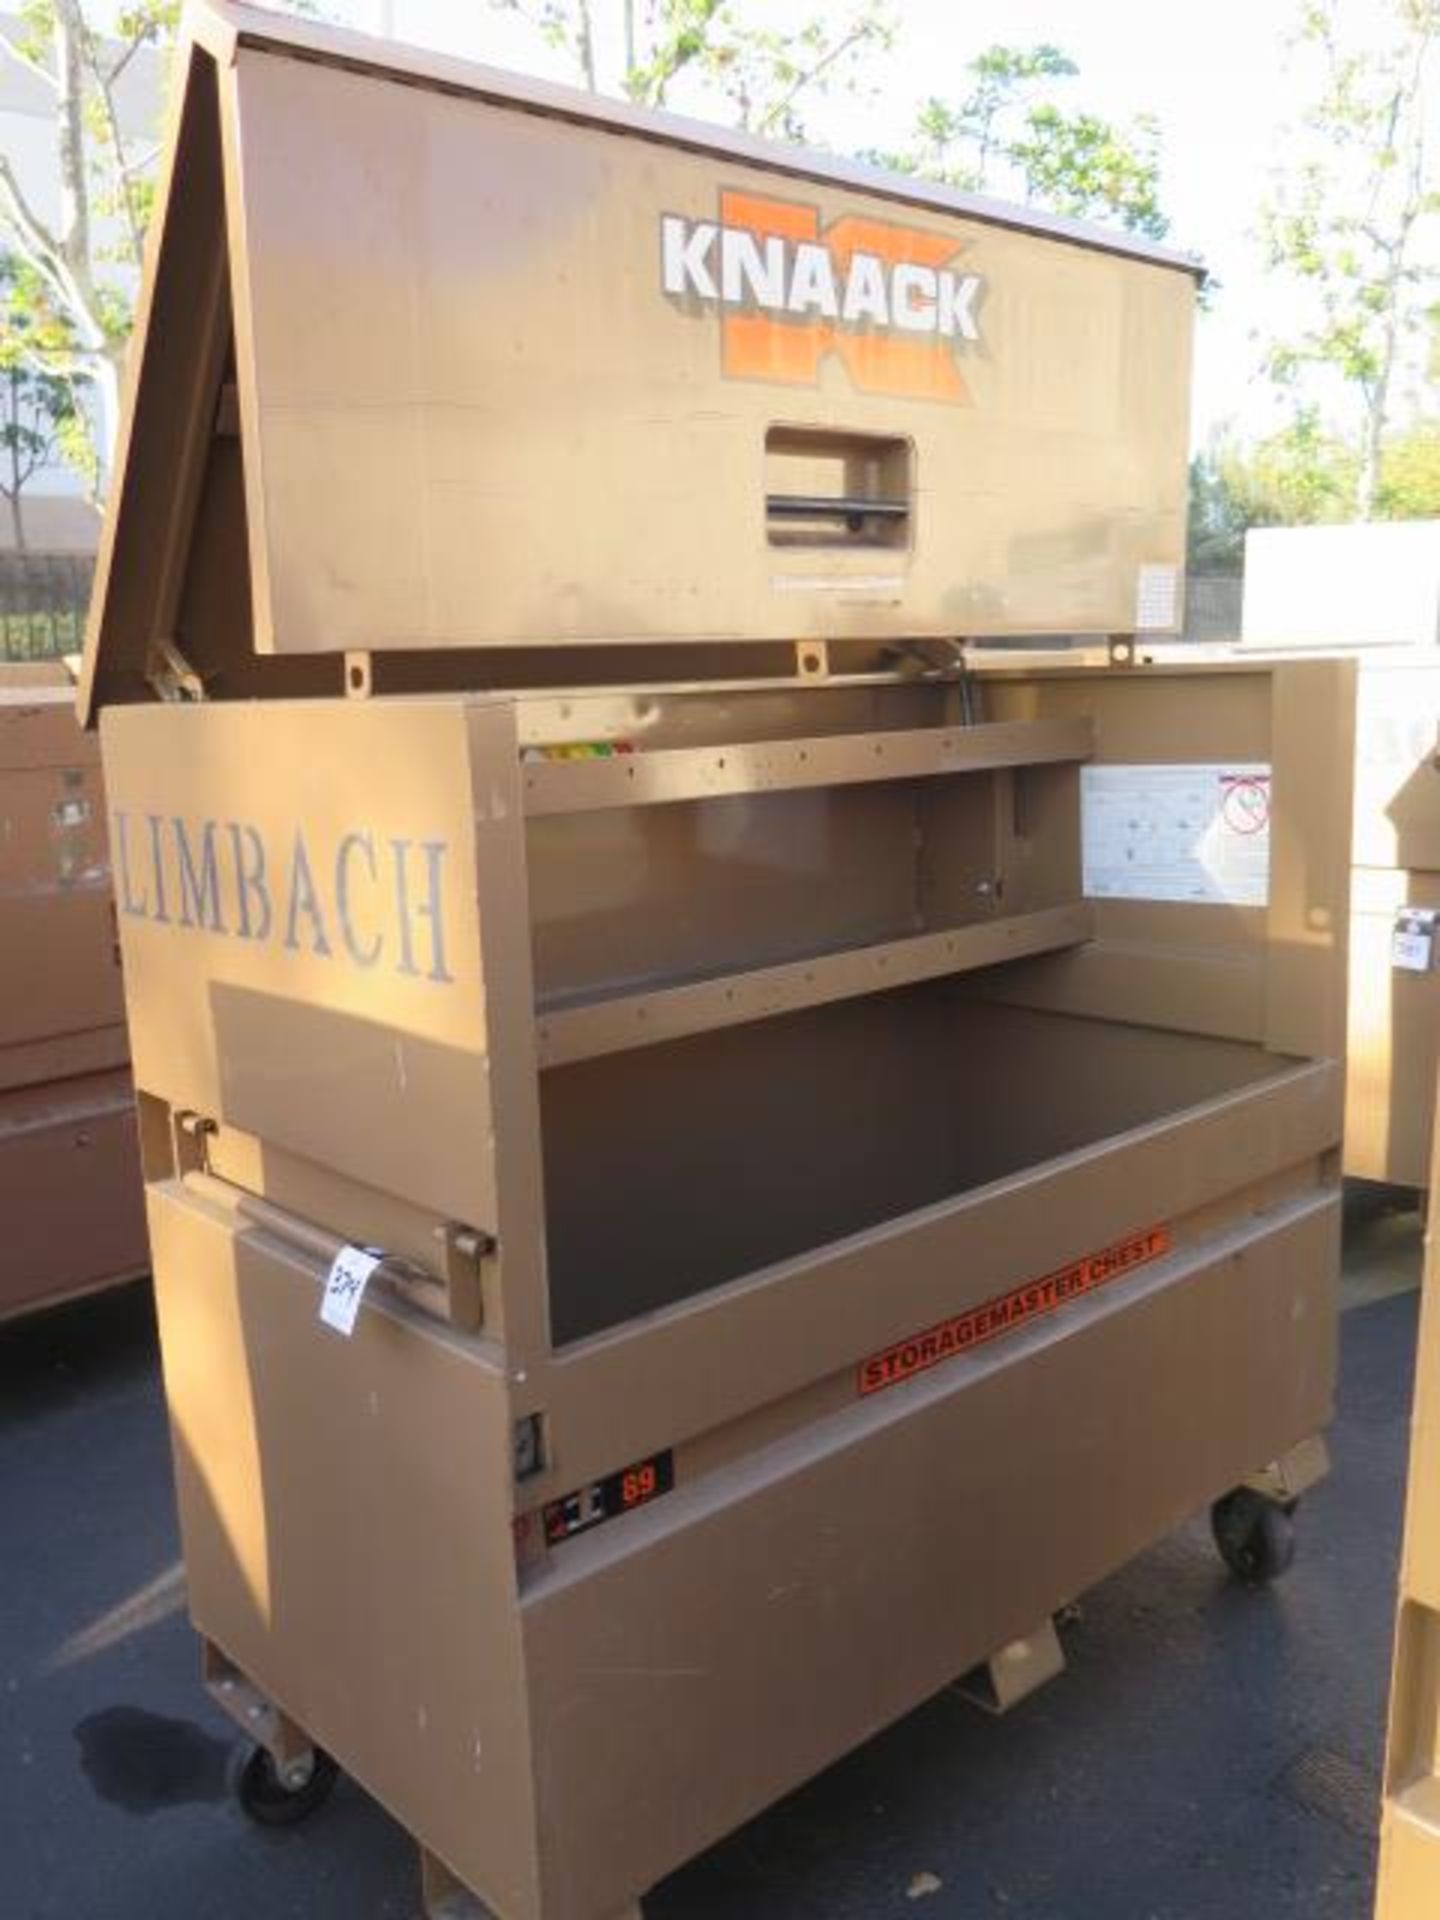 Knaack mdl. 89 Storagemaster Rolling Job Box (SOLD AS-IS - NO WARRANTY) - Image 4 of 10